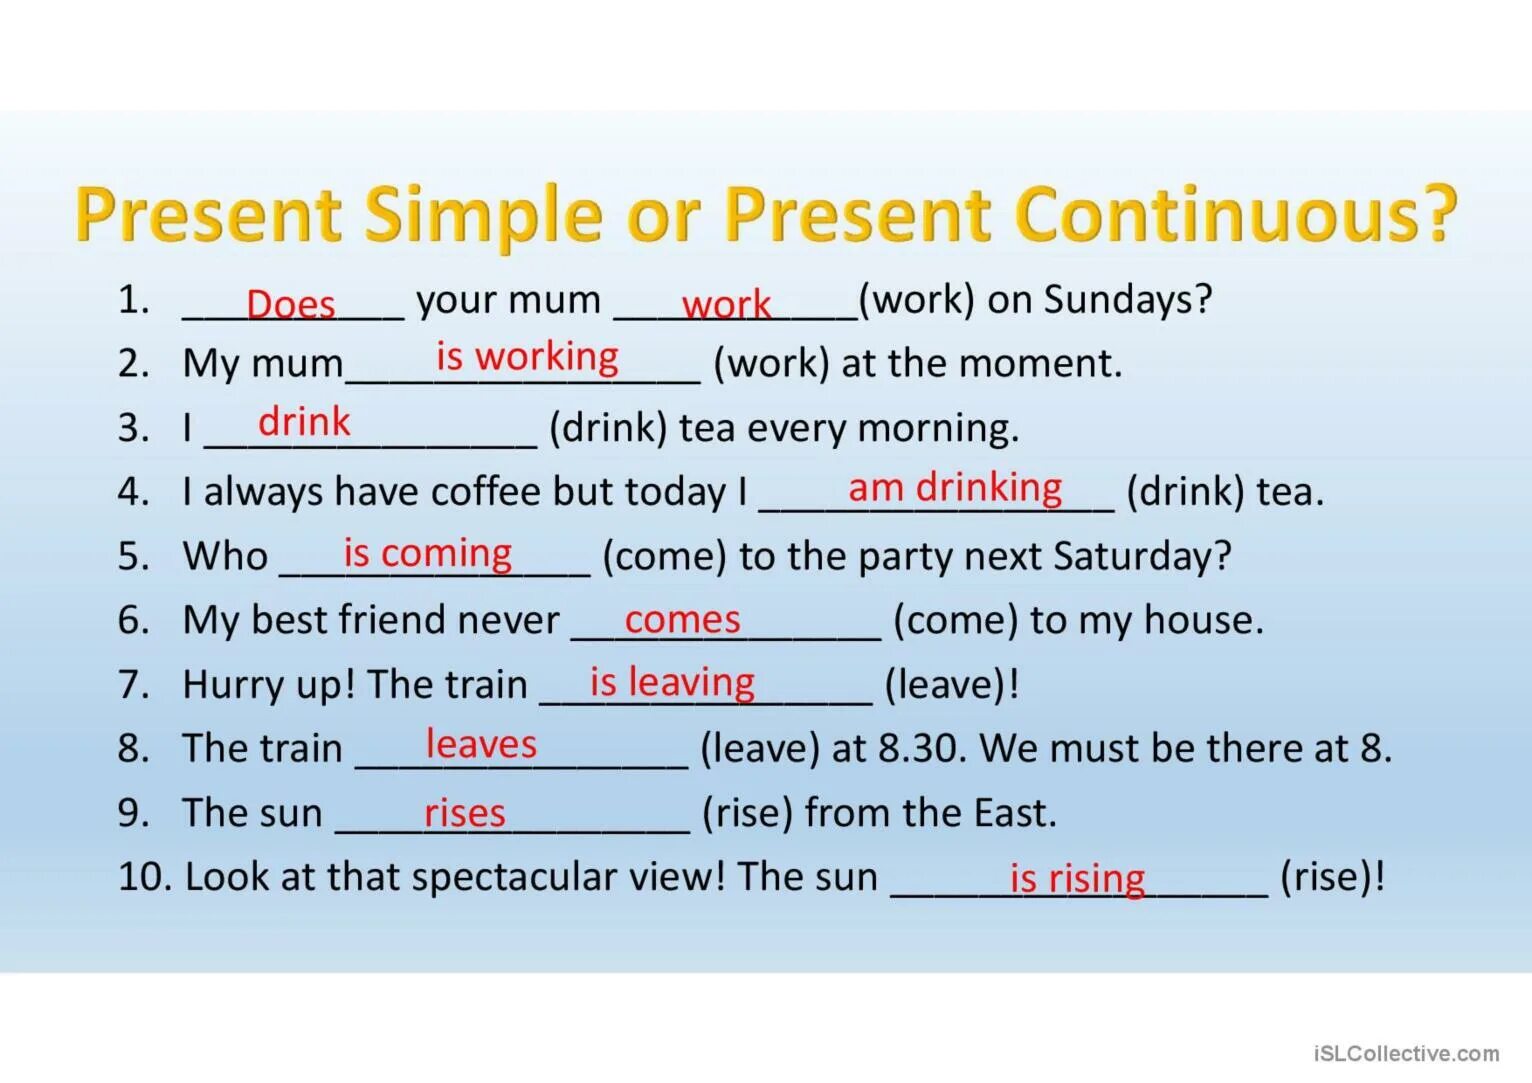 Present simple Tense present Continuous Tense. Present simple present Continuous разница. Present simple with present Continuous. Present simple vs present Continuous vs past simple Worksheets.